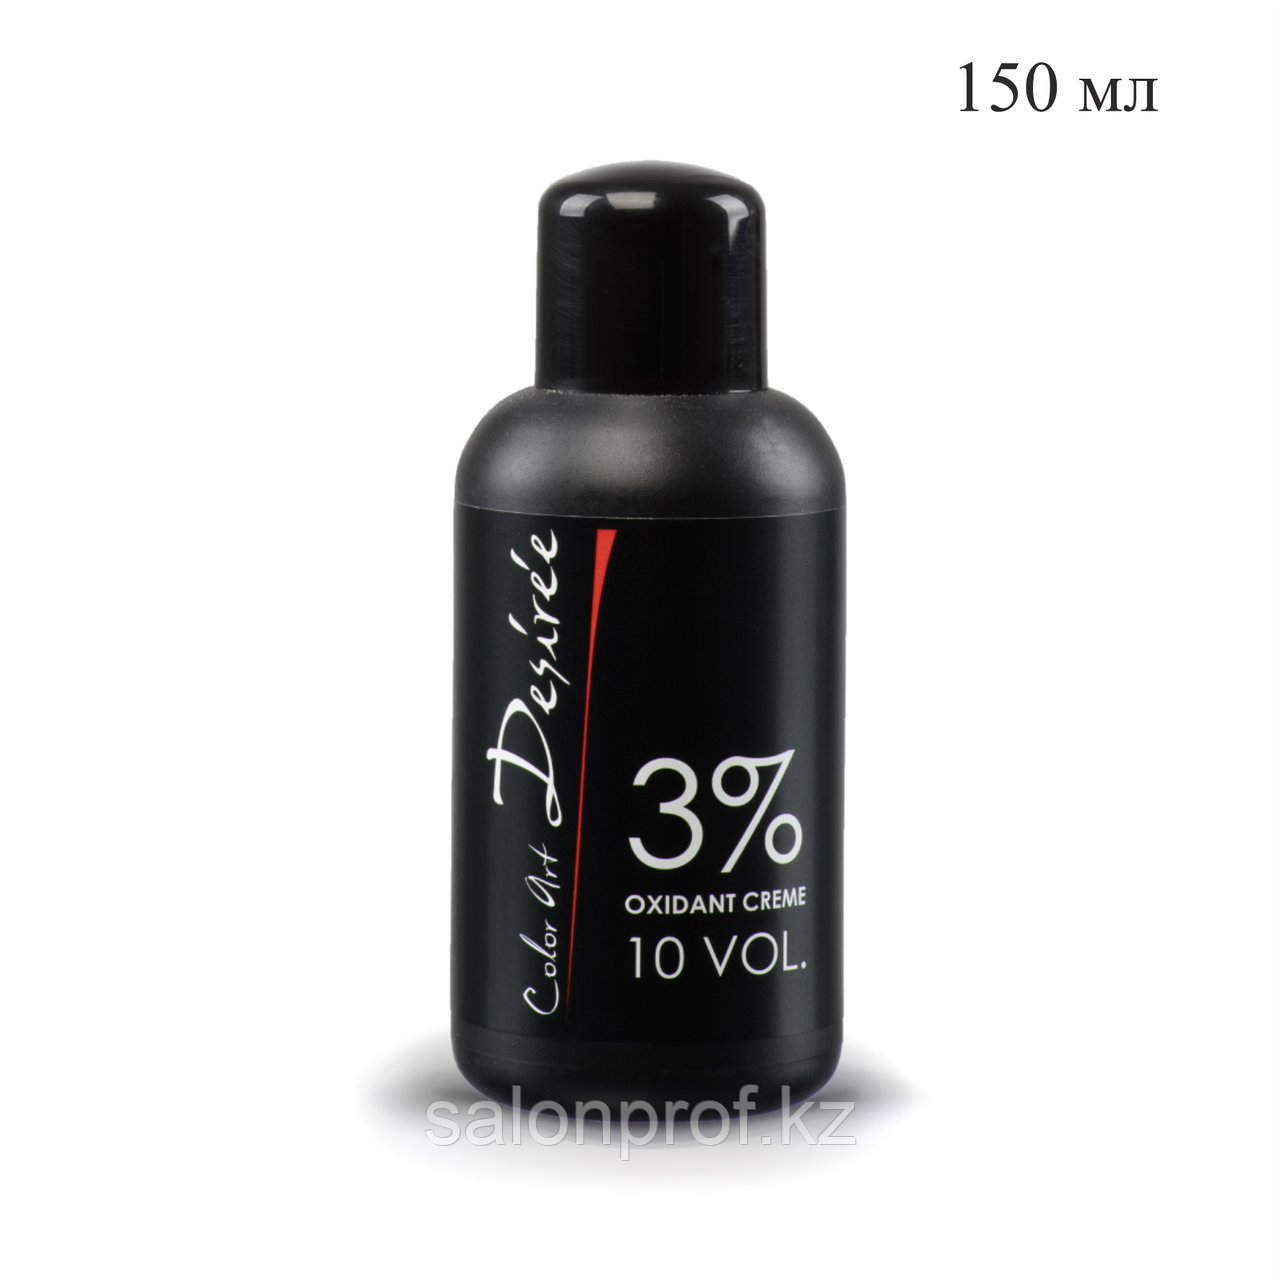 Оксидант COLOR ART DESIREE 3% (10 VOLUME) 150 мл №53145